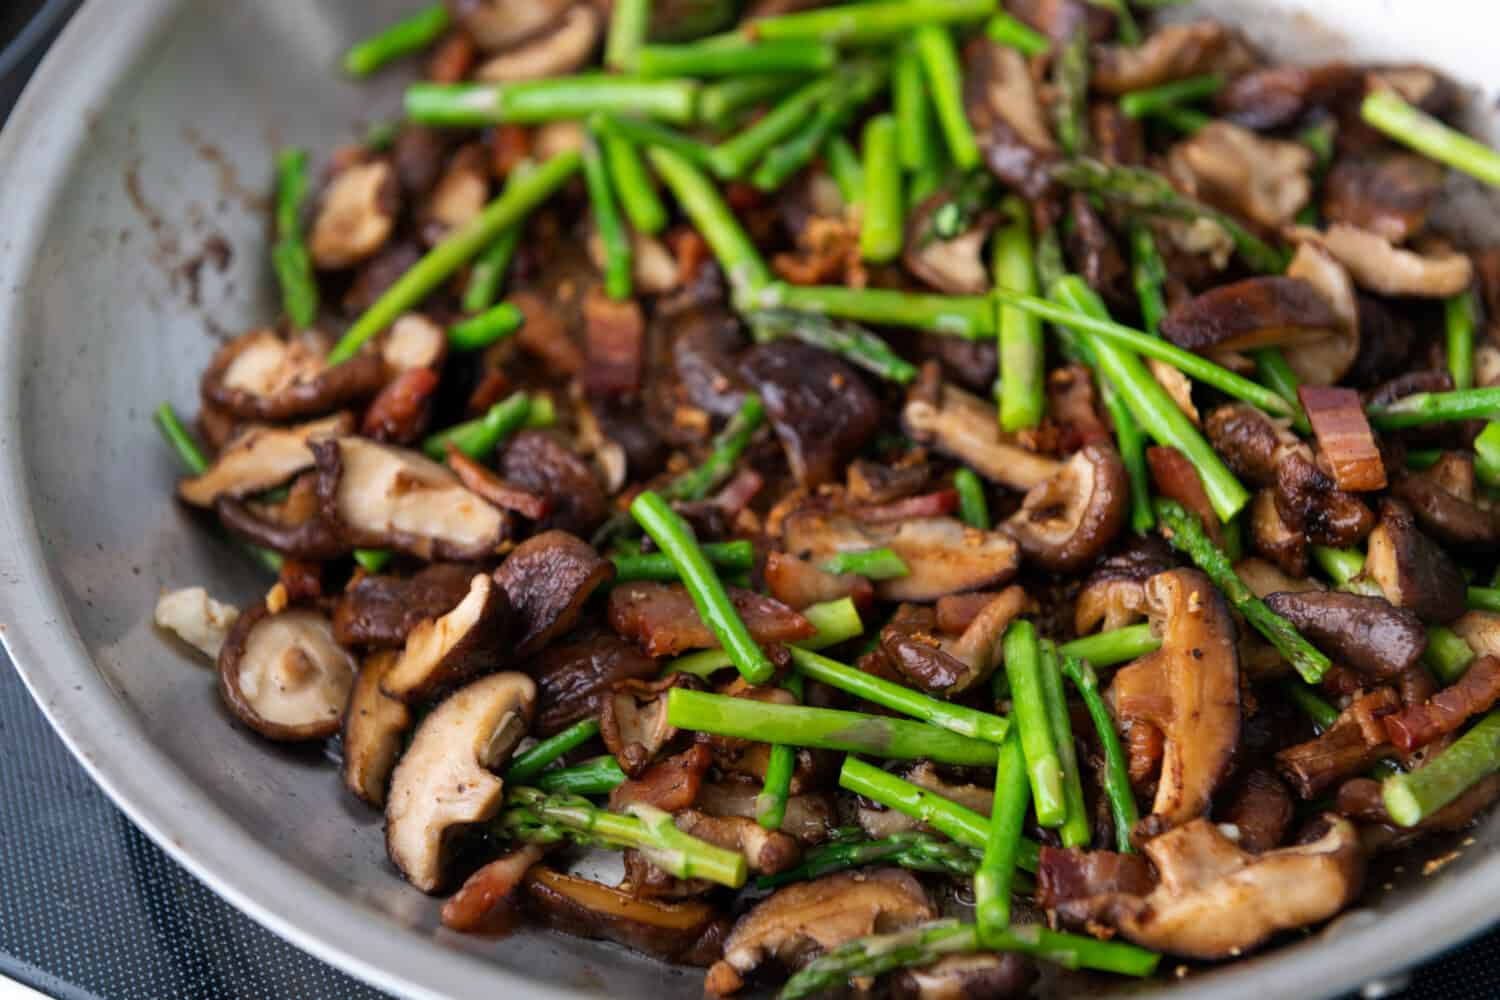 Shiitake Mushroom and Young Asparagus Sautéed in Skillet for Vegan Dinner